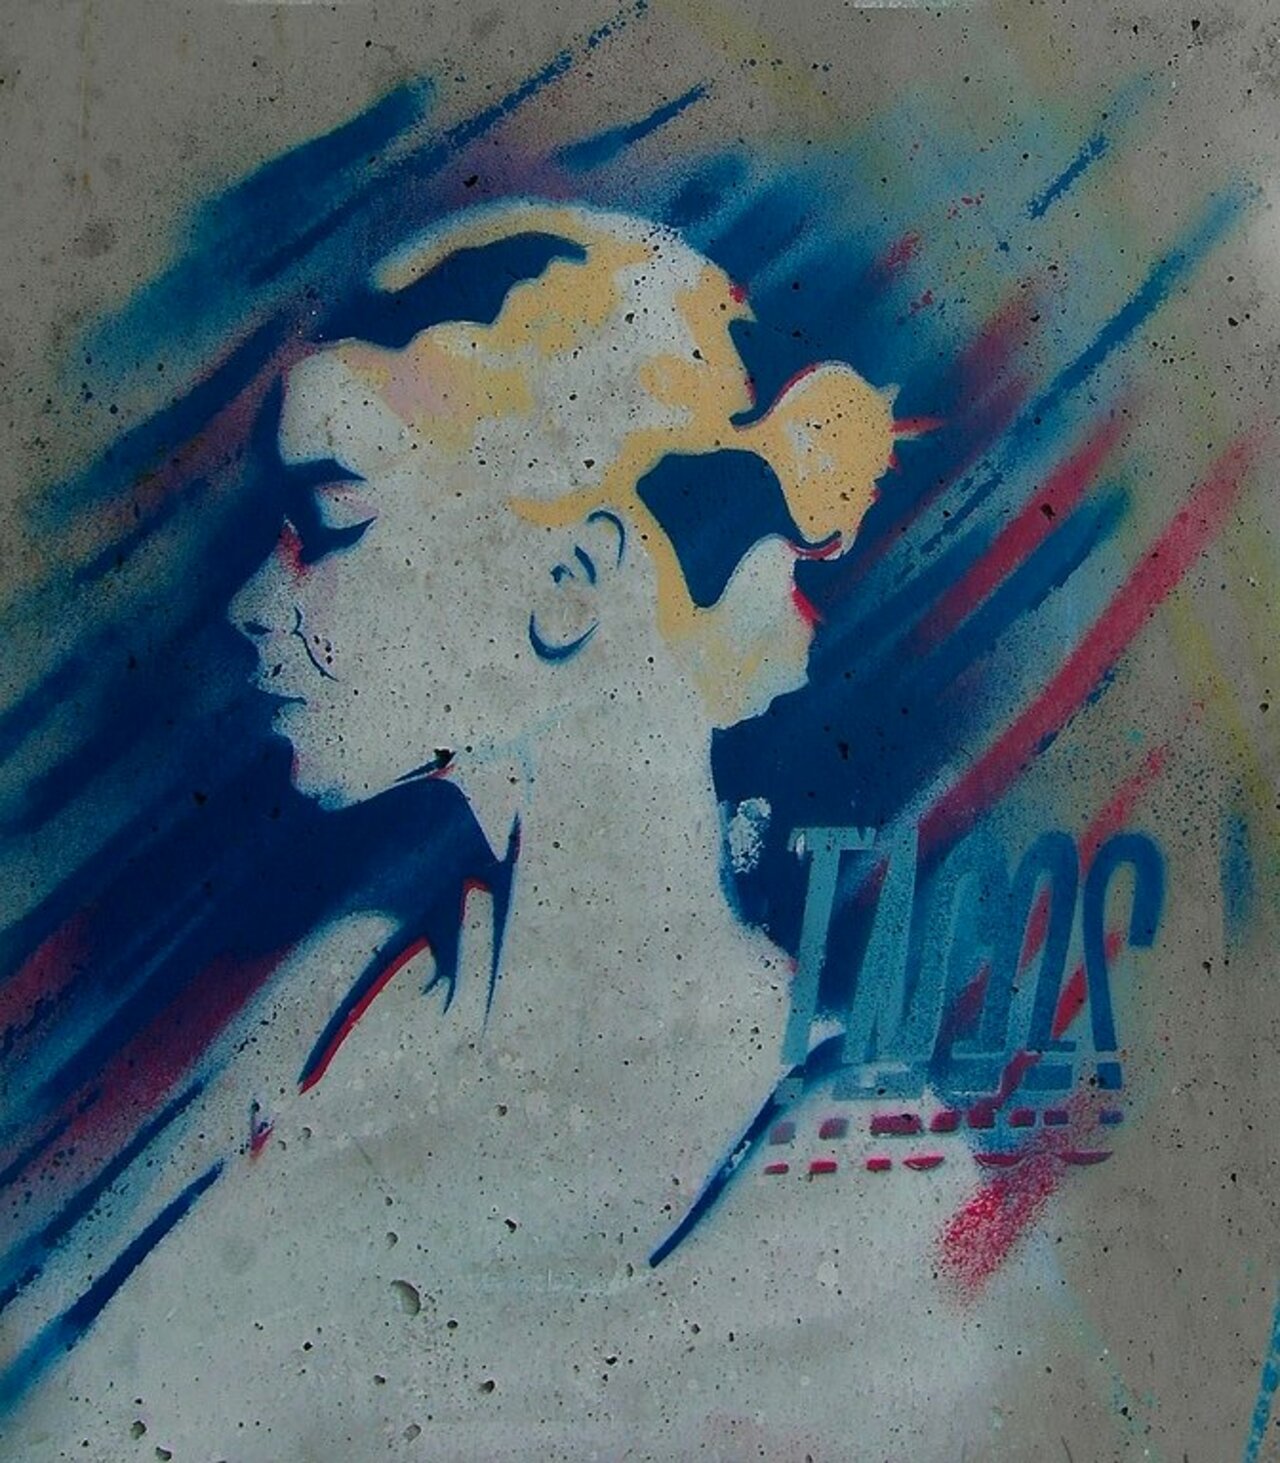 Street Art by anonymous in #Vitry-sur-Seine http://www.urbacolors.com #art #mural #graffiti #streetart https://t.co/NRU73BMlqH